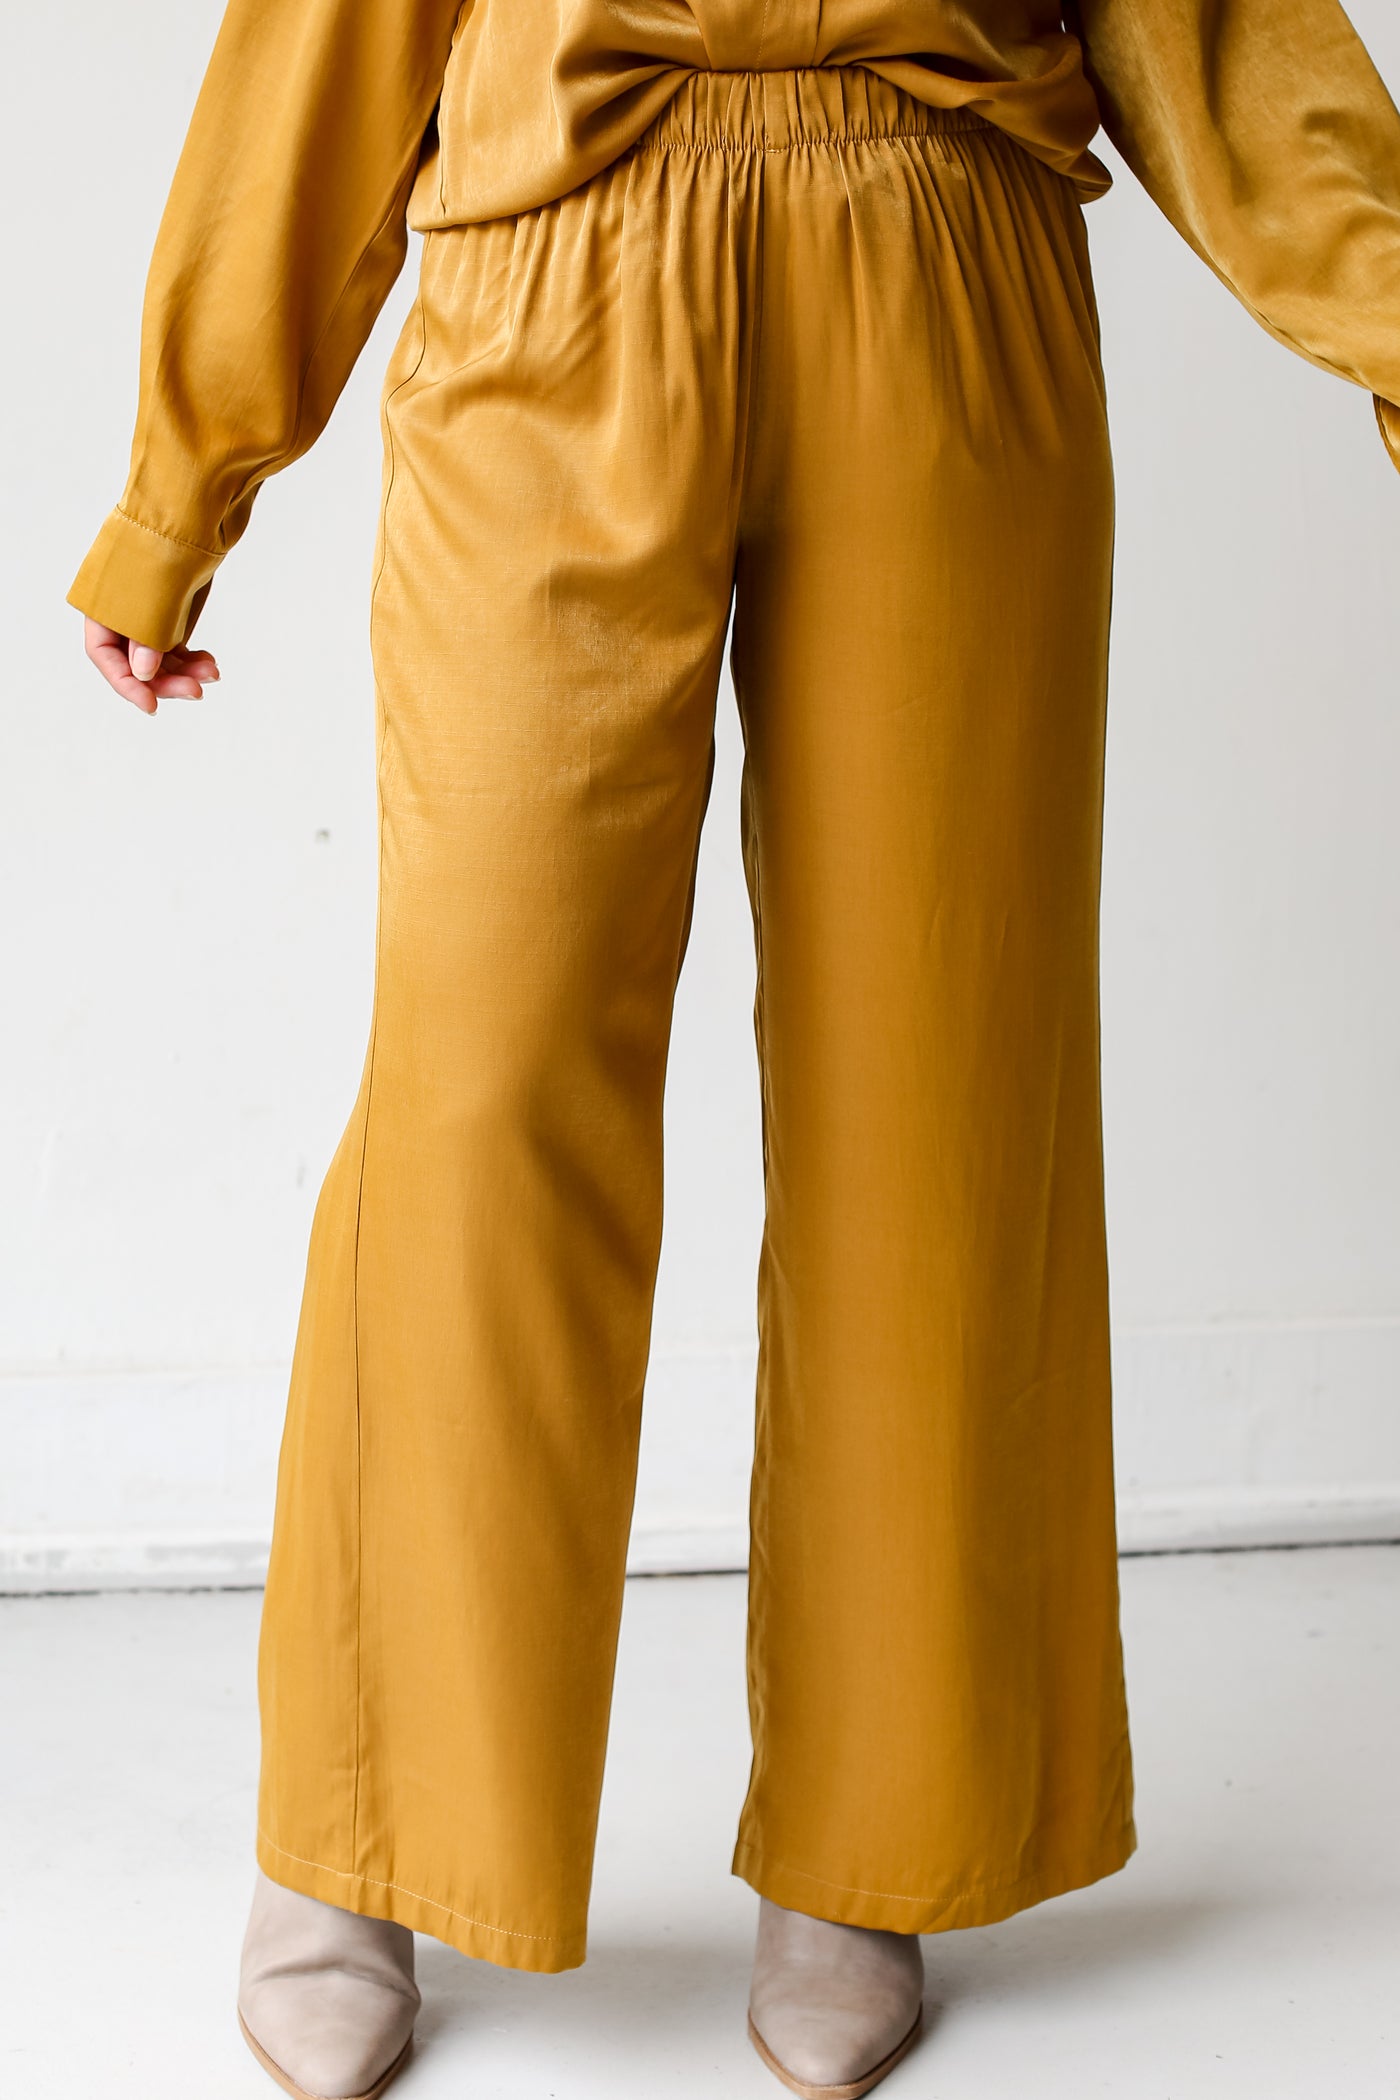 model wearing trendy yellow pants